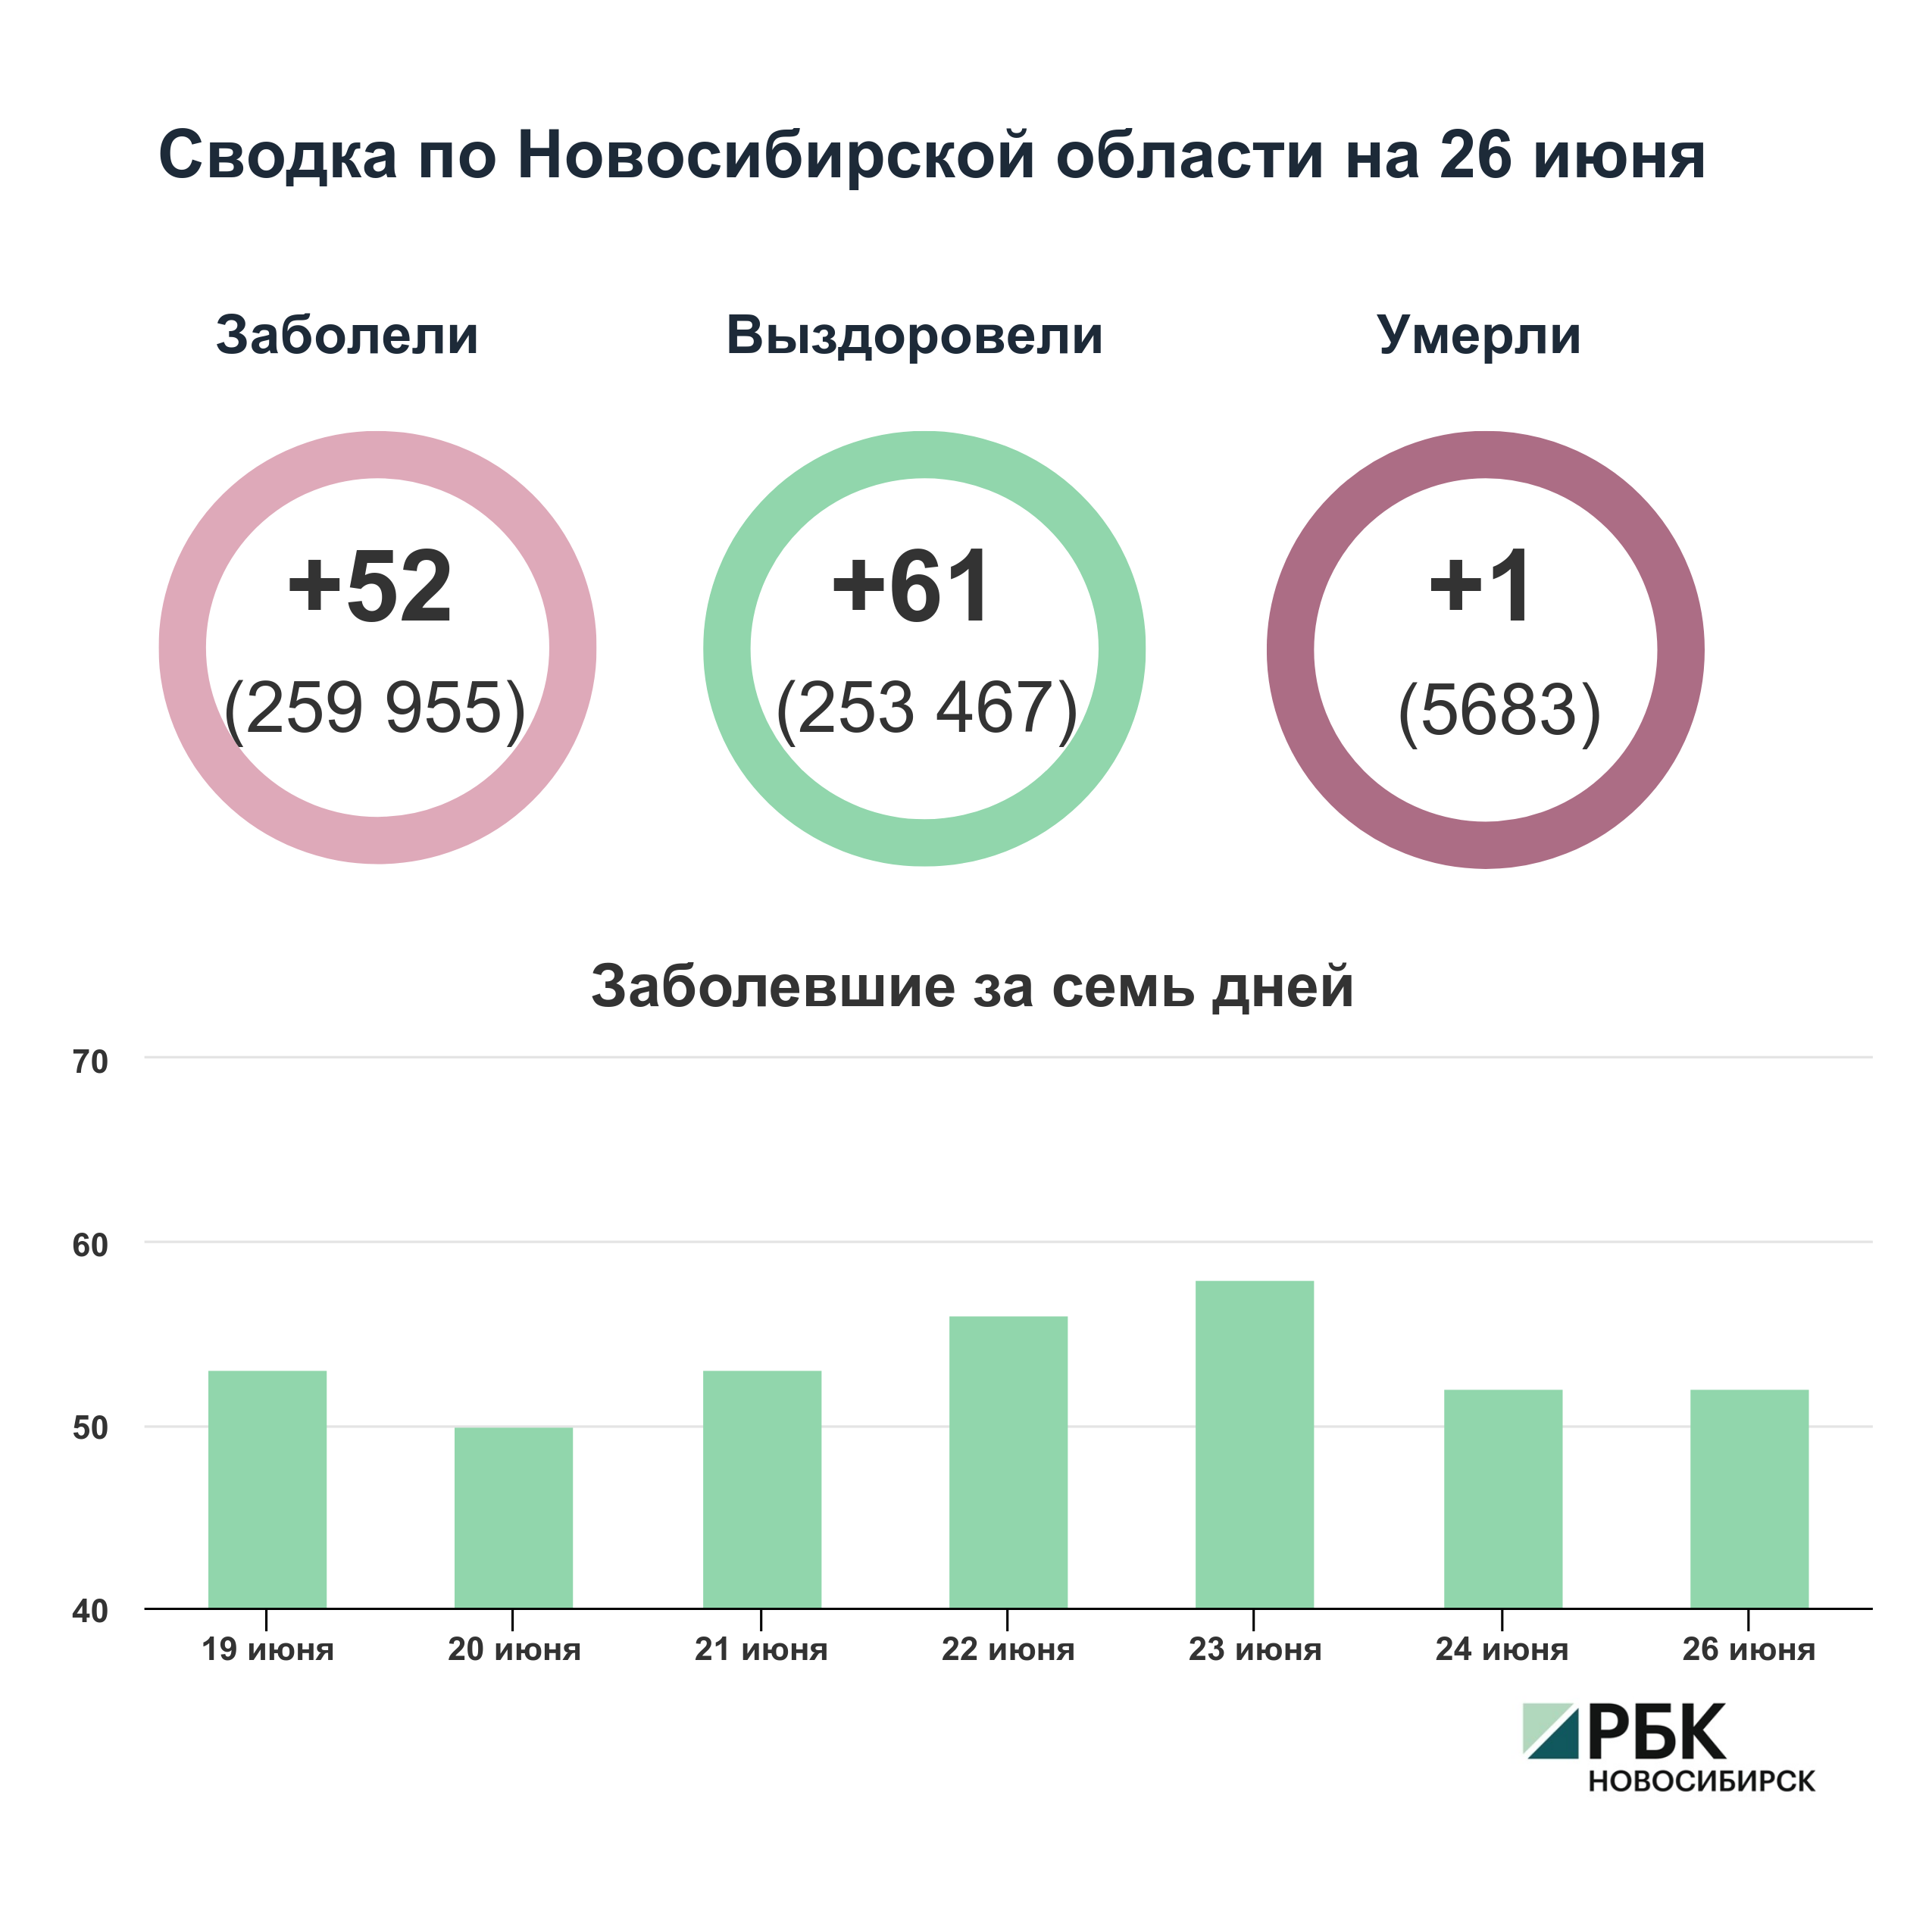 Коронавирус в Новосибирске: сводка на 26 июня